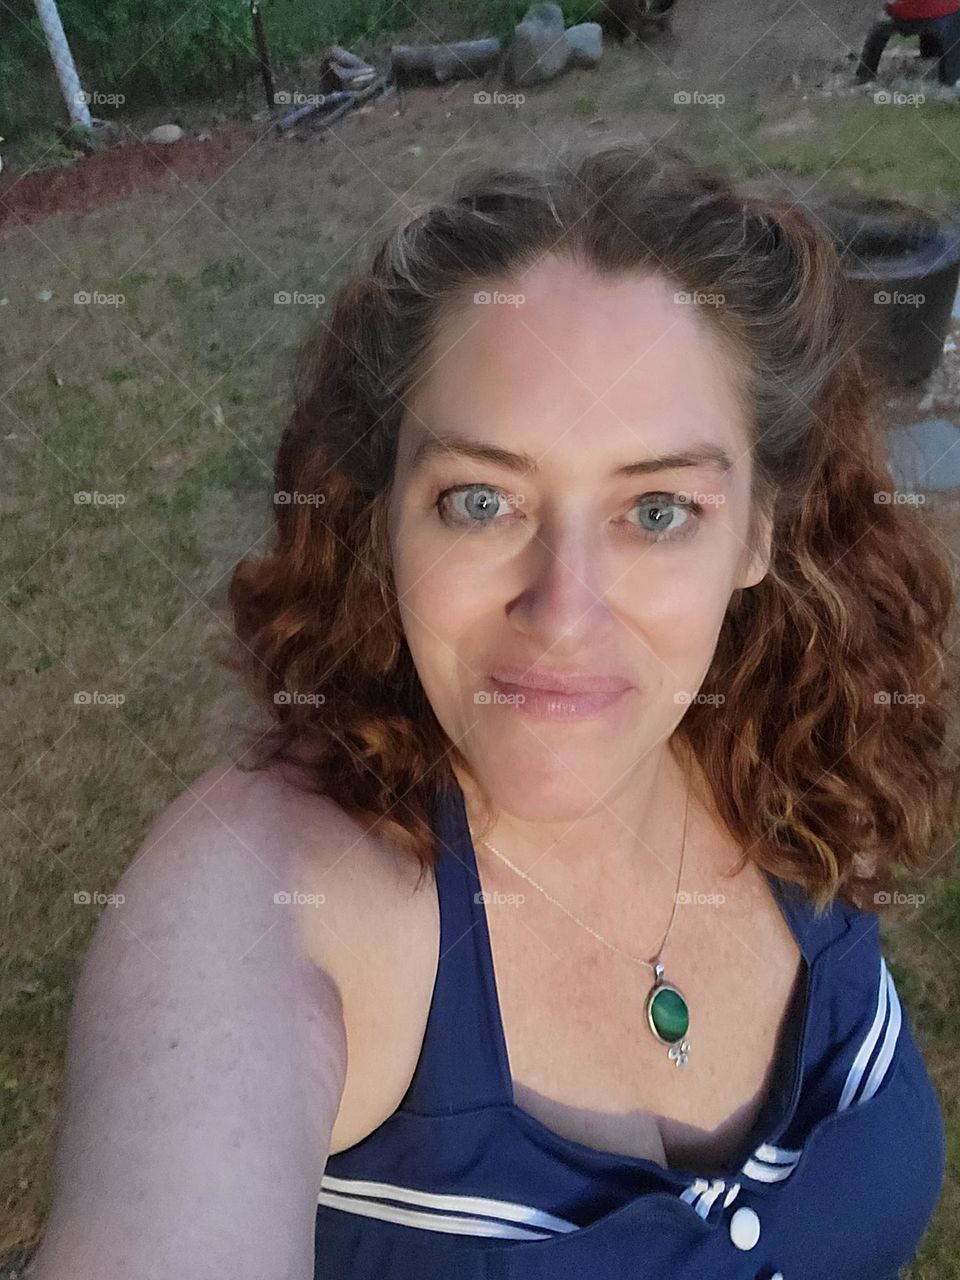 Getting old isnt so bad. Backyard selfie in a sailor dress